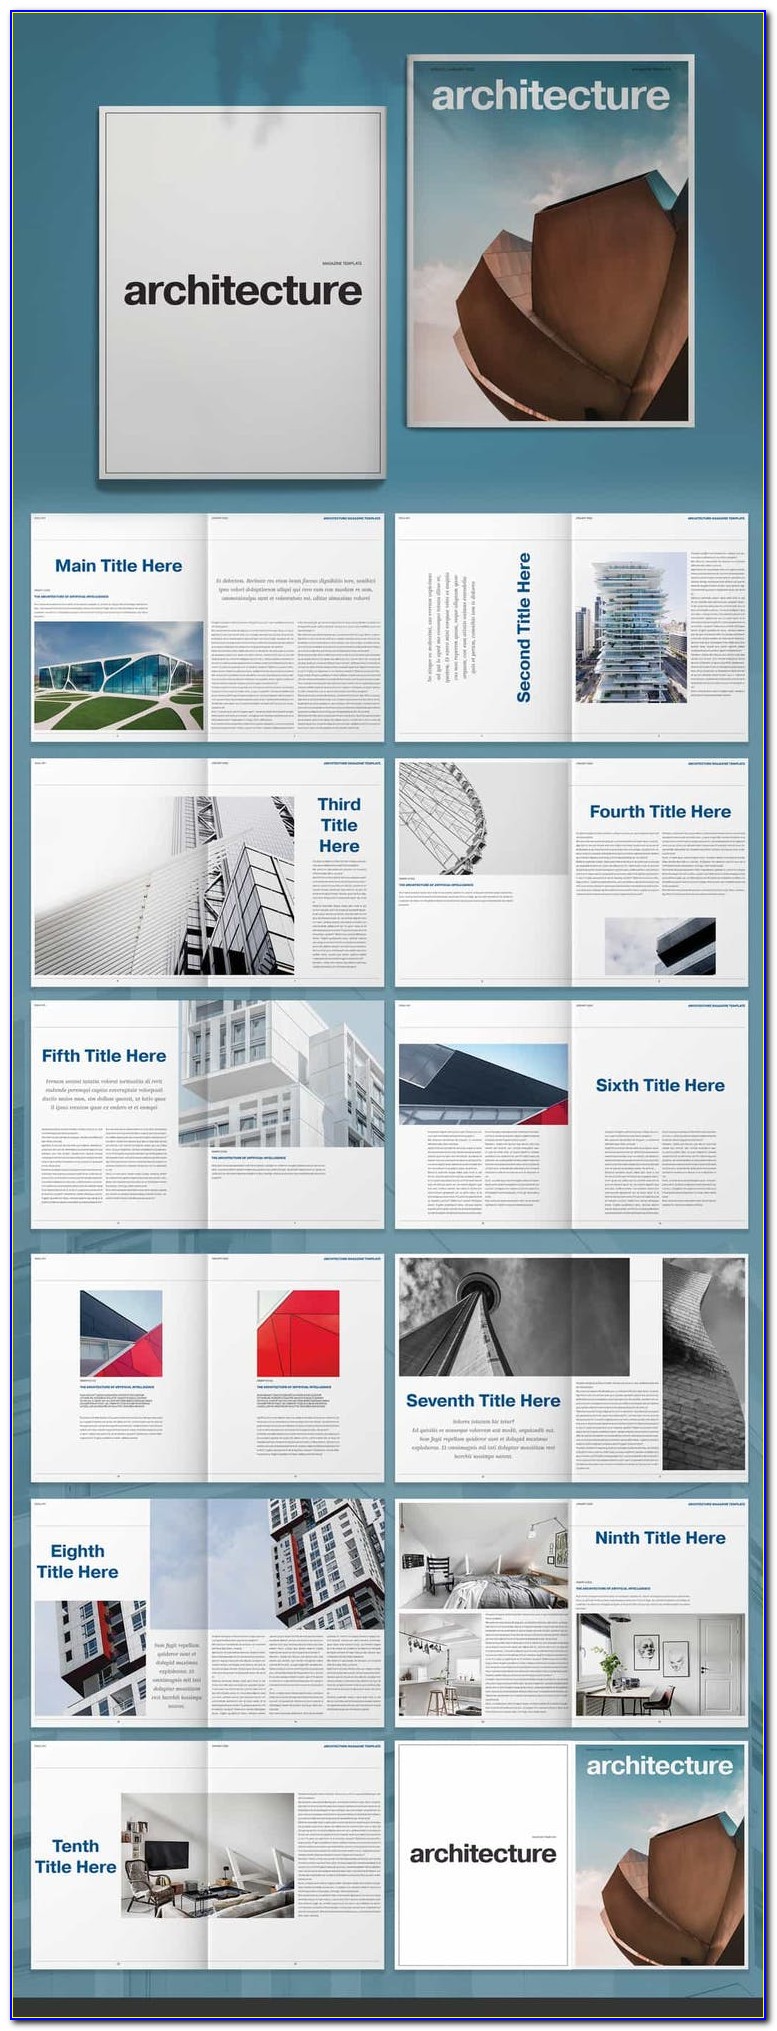 Indesign Templates Architecture Portfolio Free Download